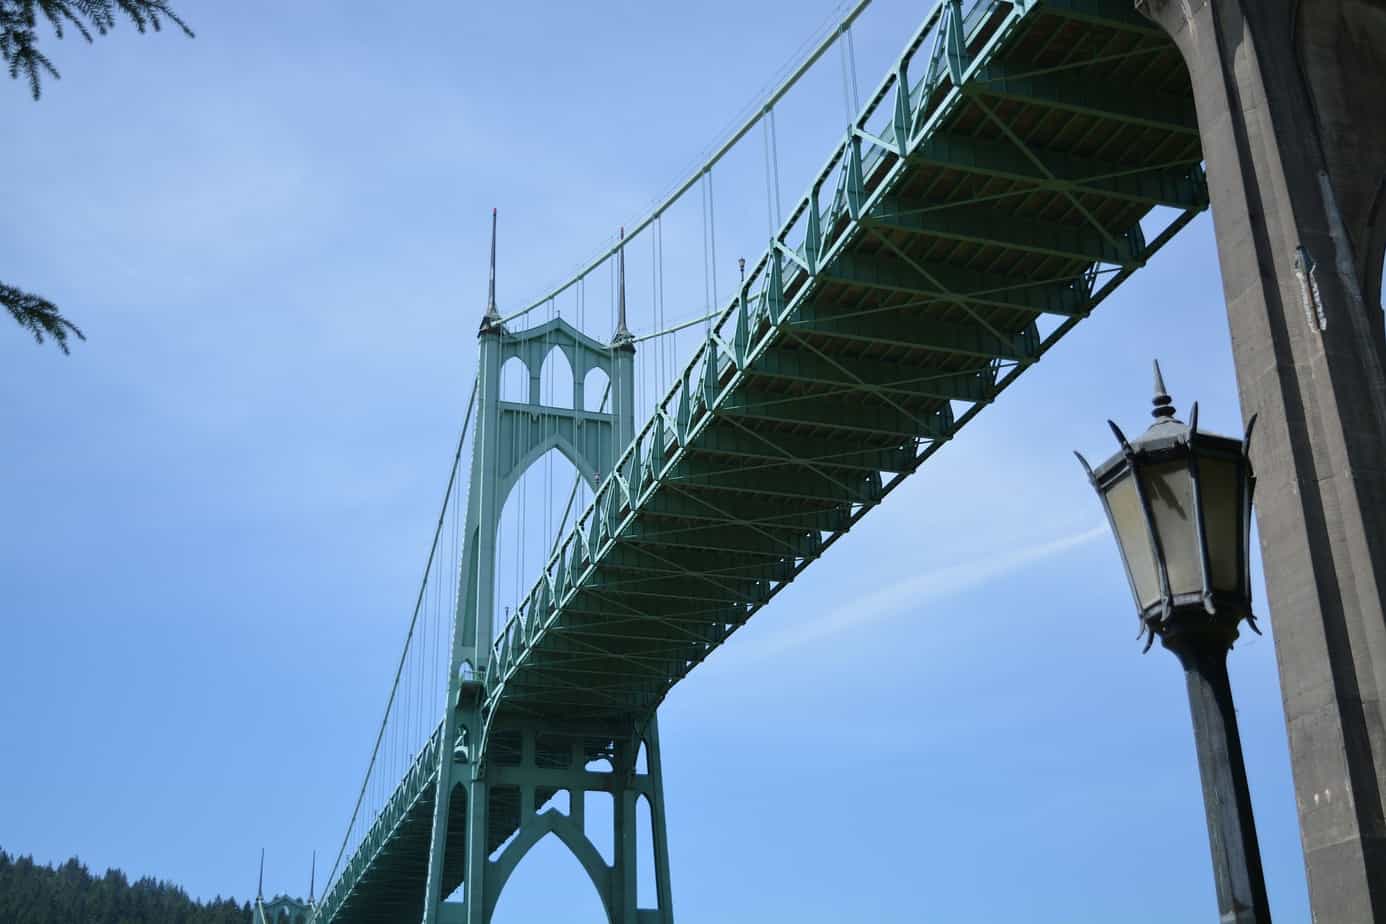 St. Johns bridge and blue sky